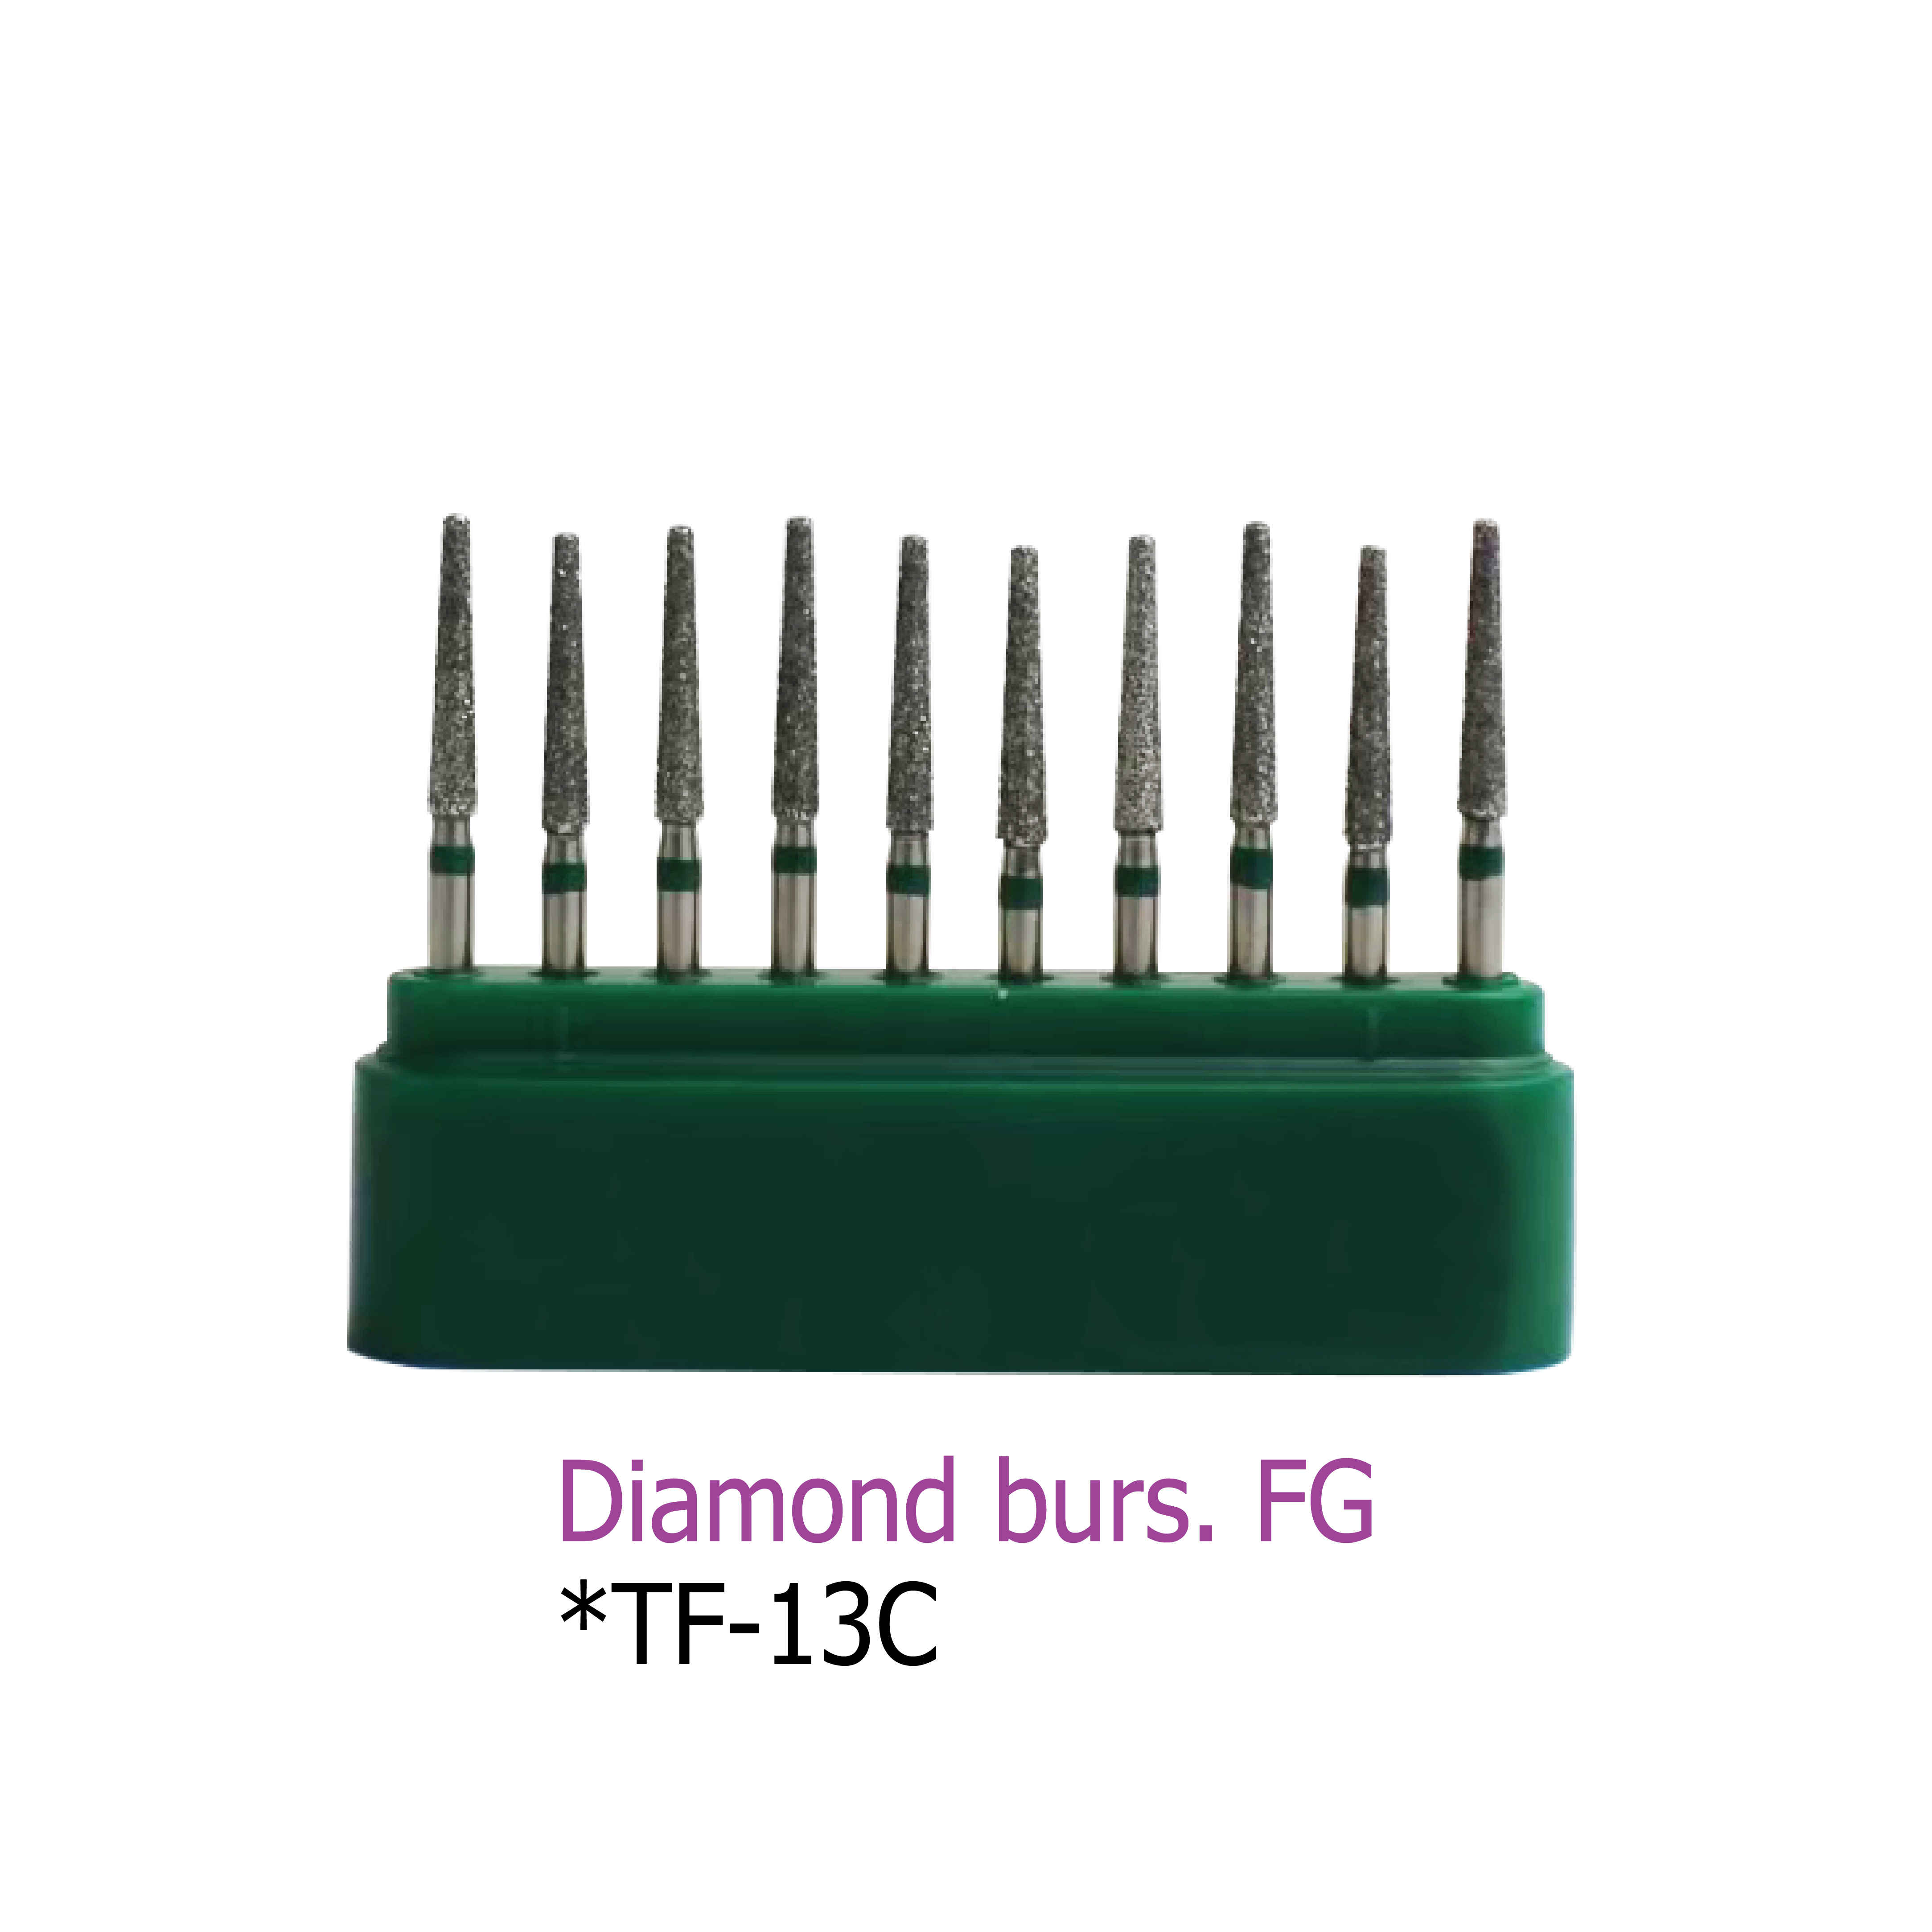 Diamond burs. FG *TF-13C